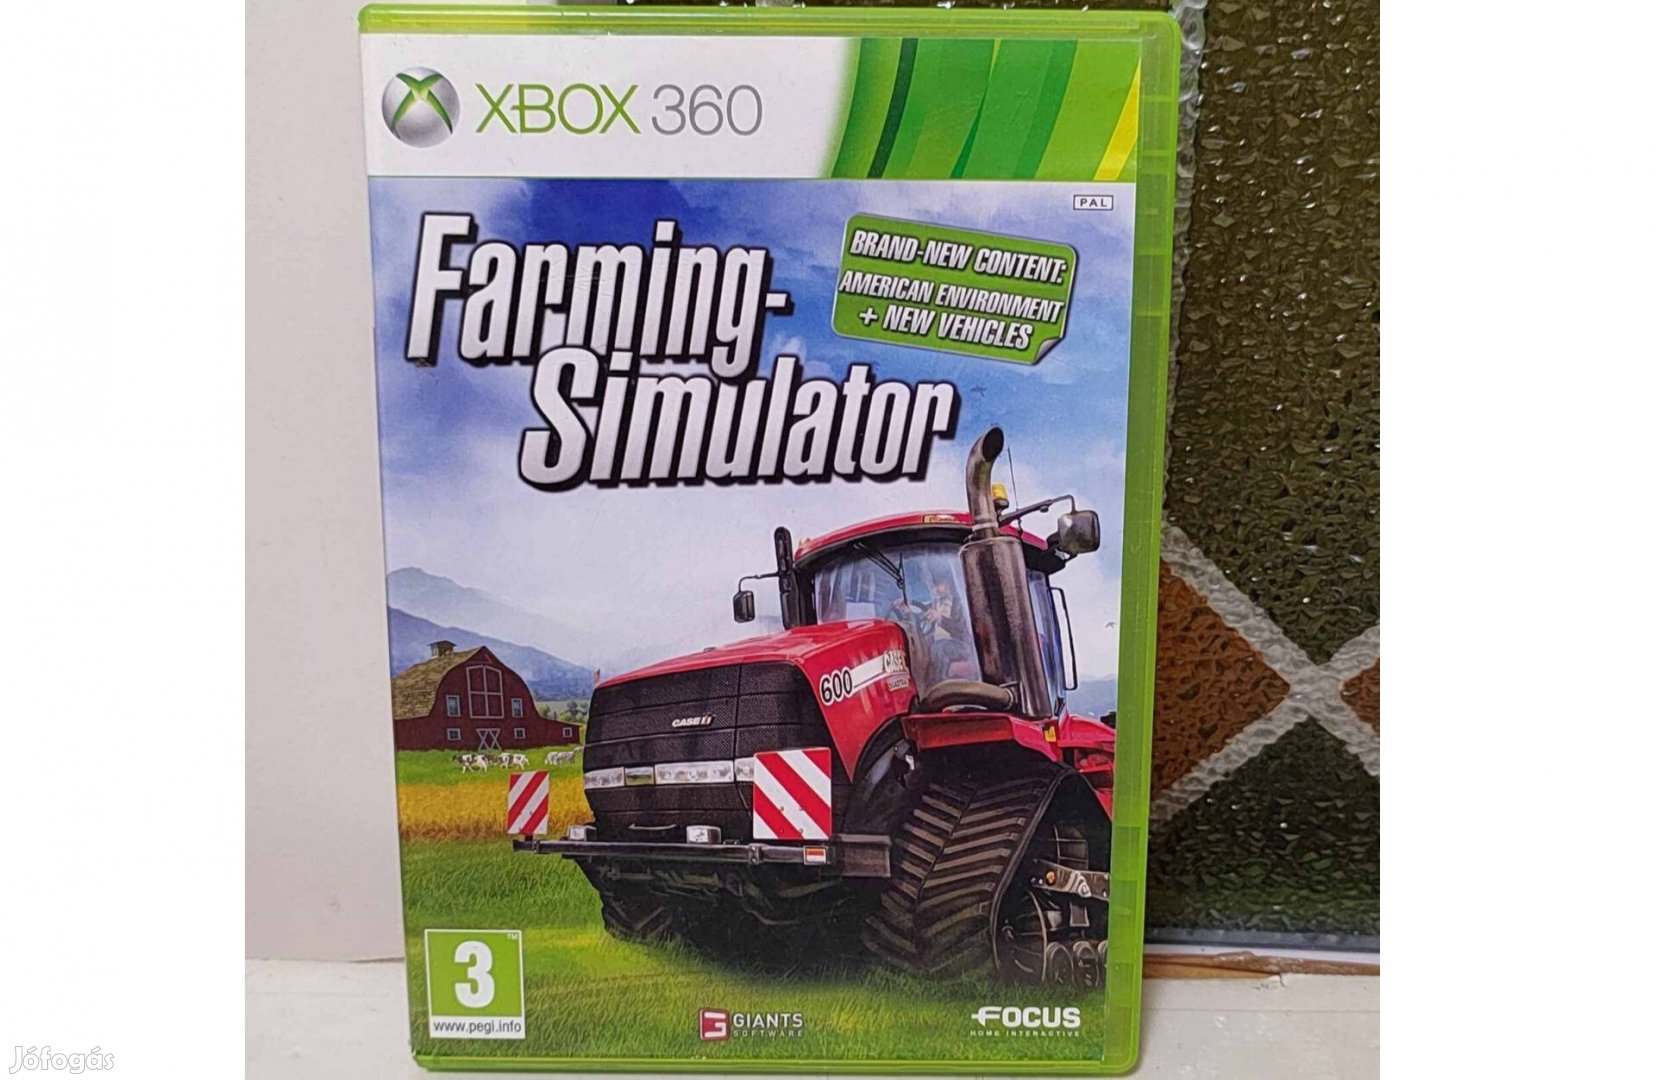 Xbox 360 Farming Simulator